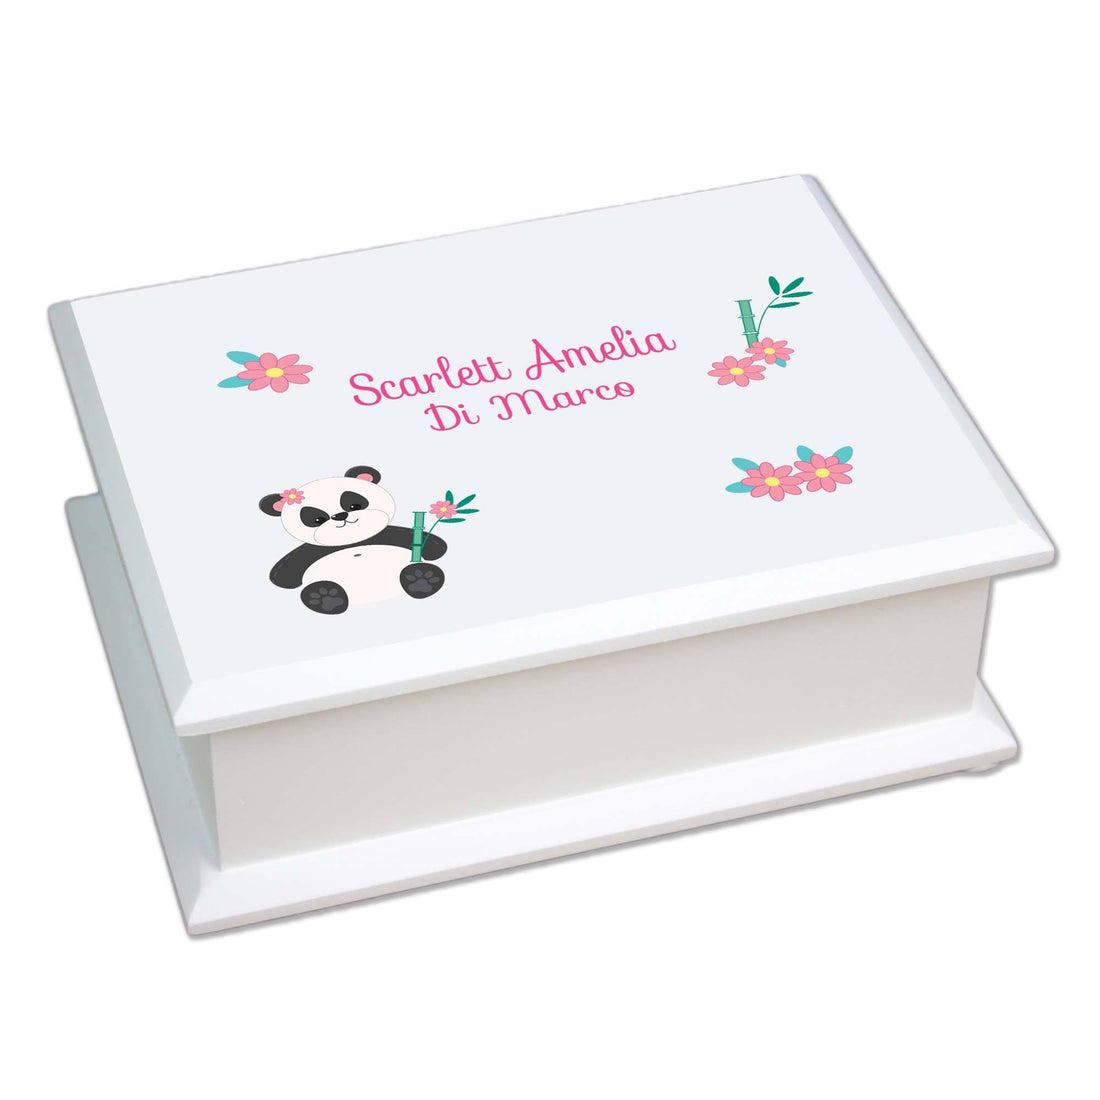 Personalized Lift Top Jewelry Box with Panda Bear design